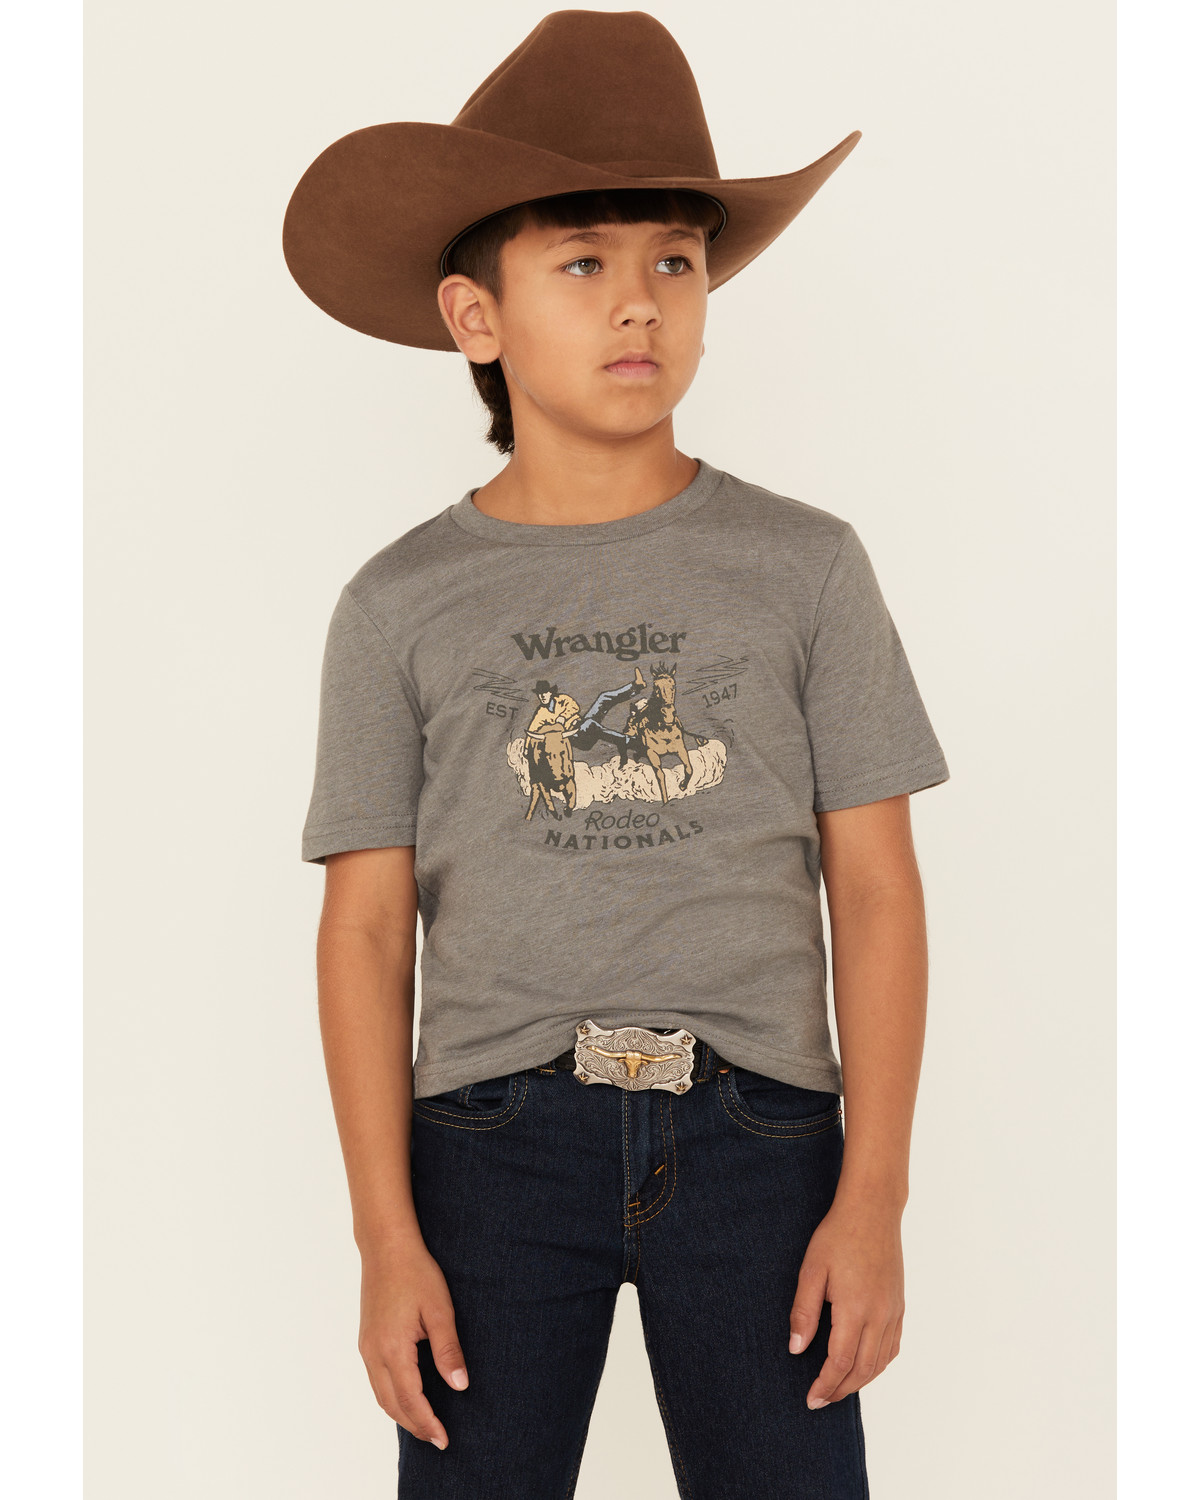 Wrangler Boys' Rodeo Nationals Short Sleeve Graphic T-Shirt